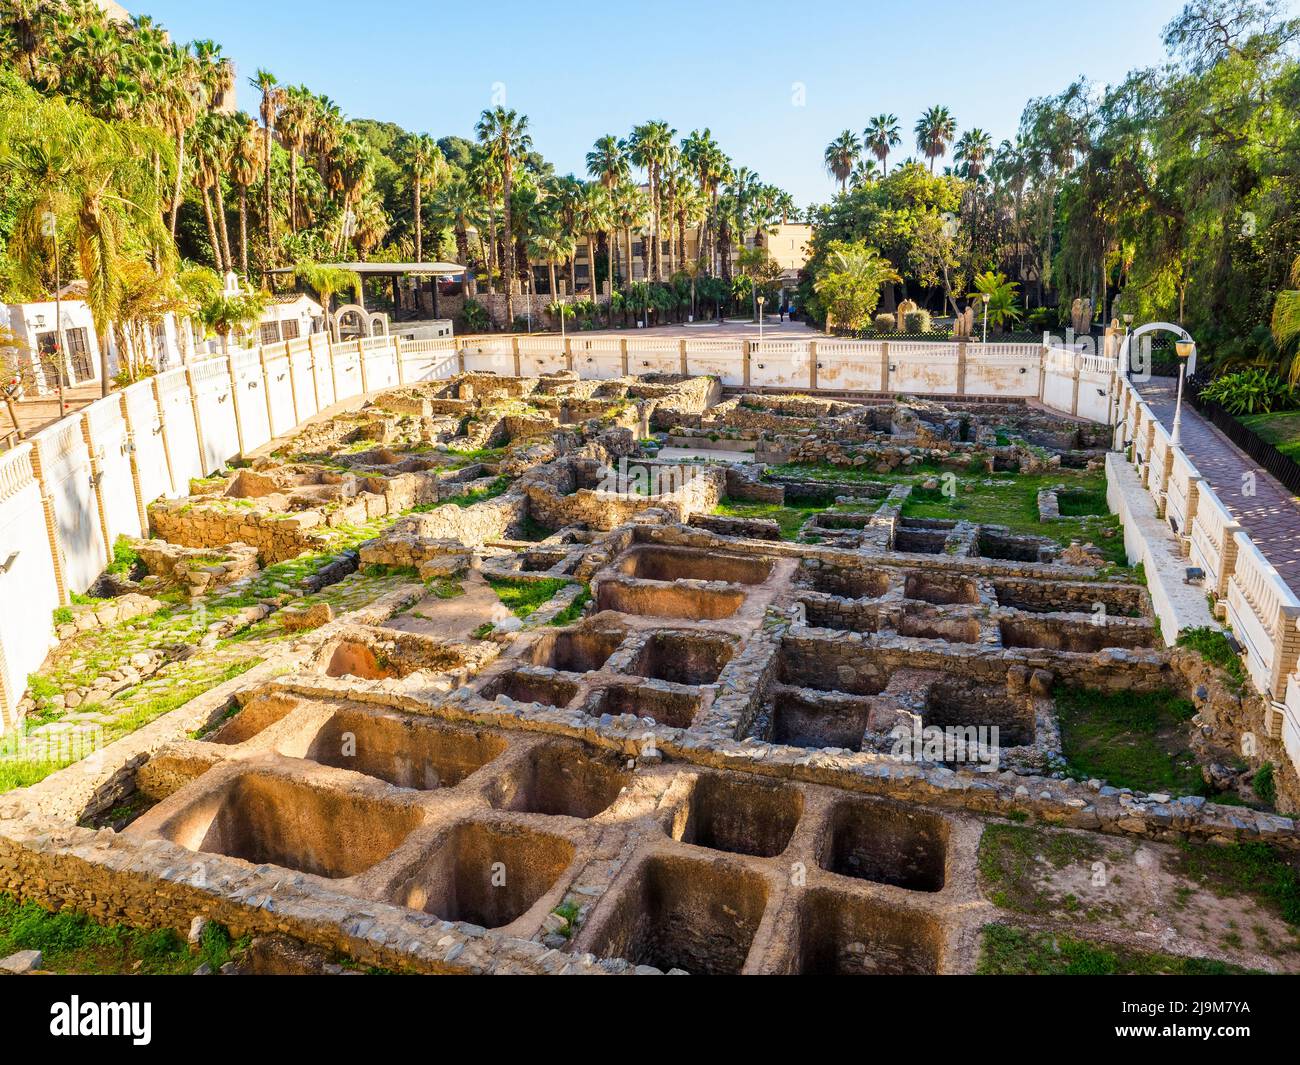 Ruinen der Fischfabrik 'El Majuelo' in Almunecar - Andalusien, Spanien Stockfoto